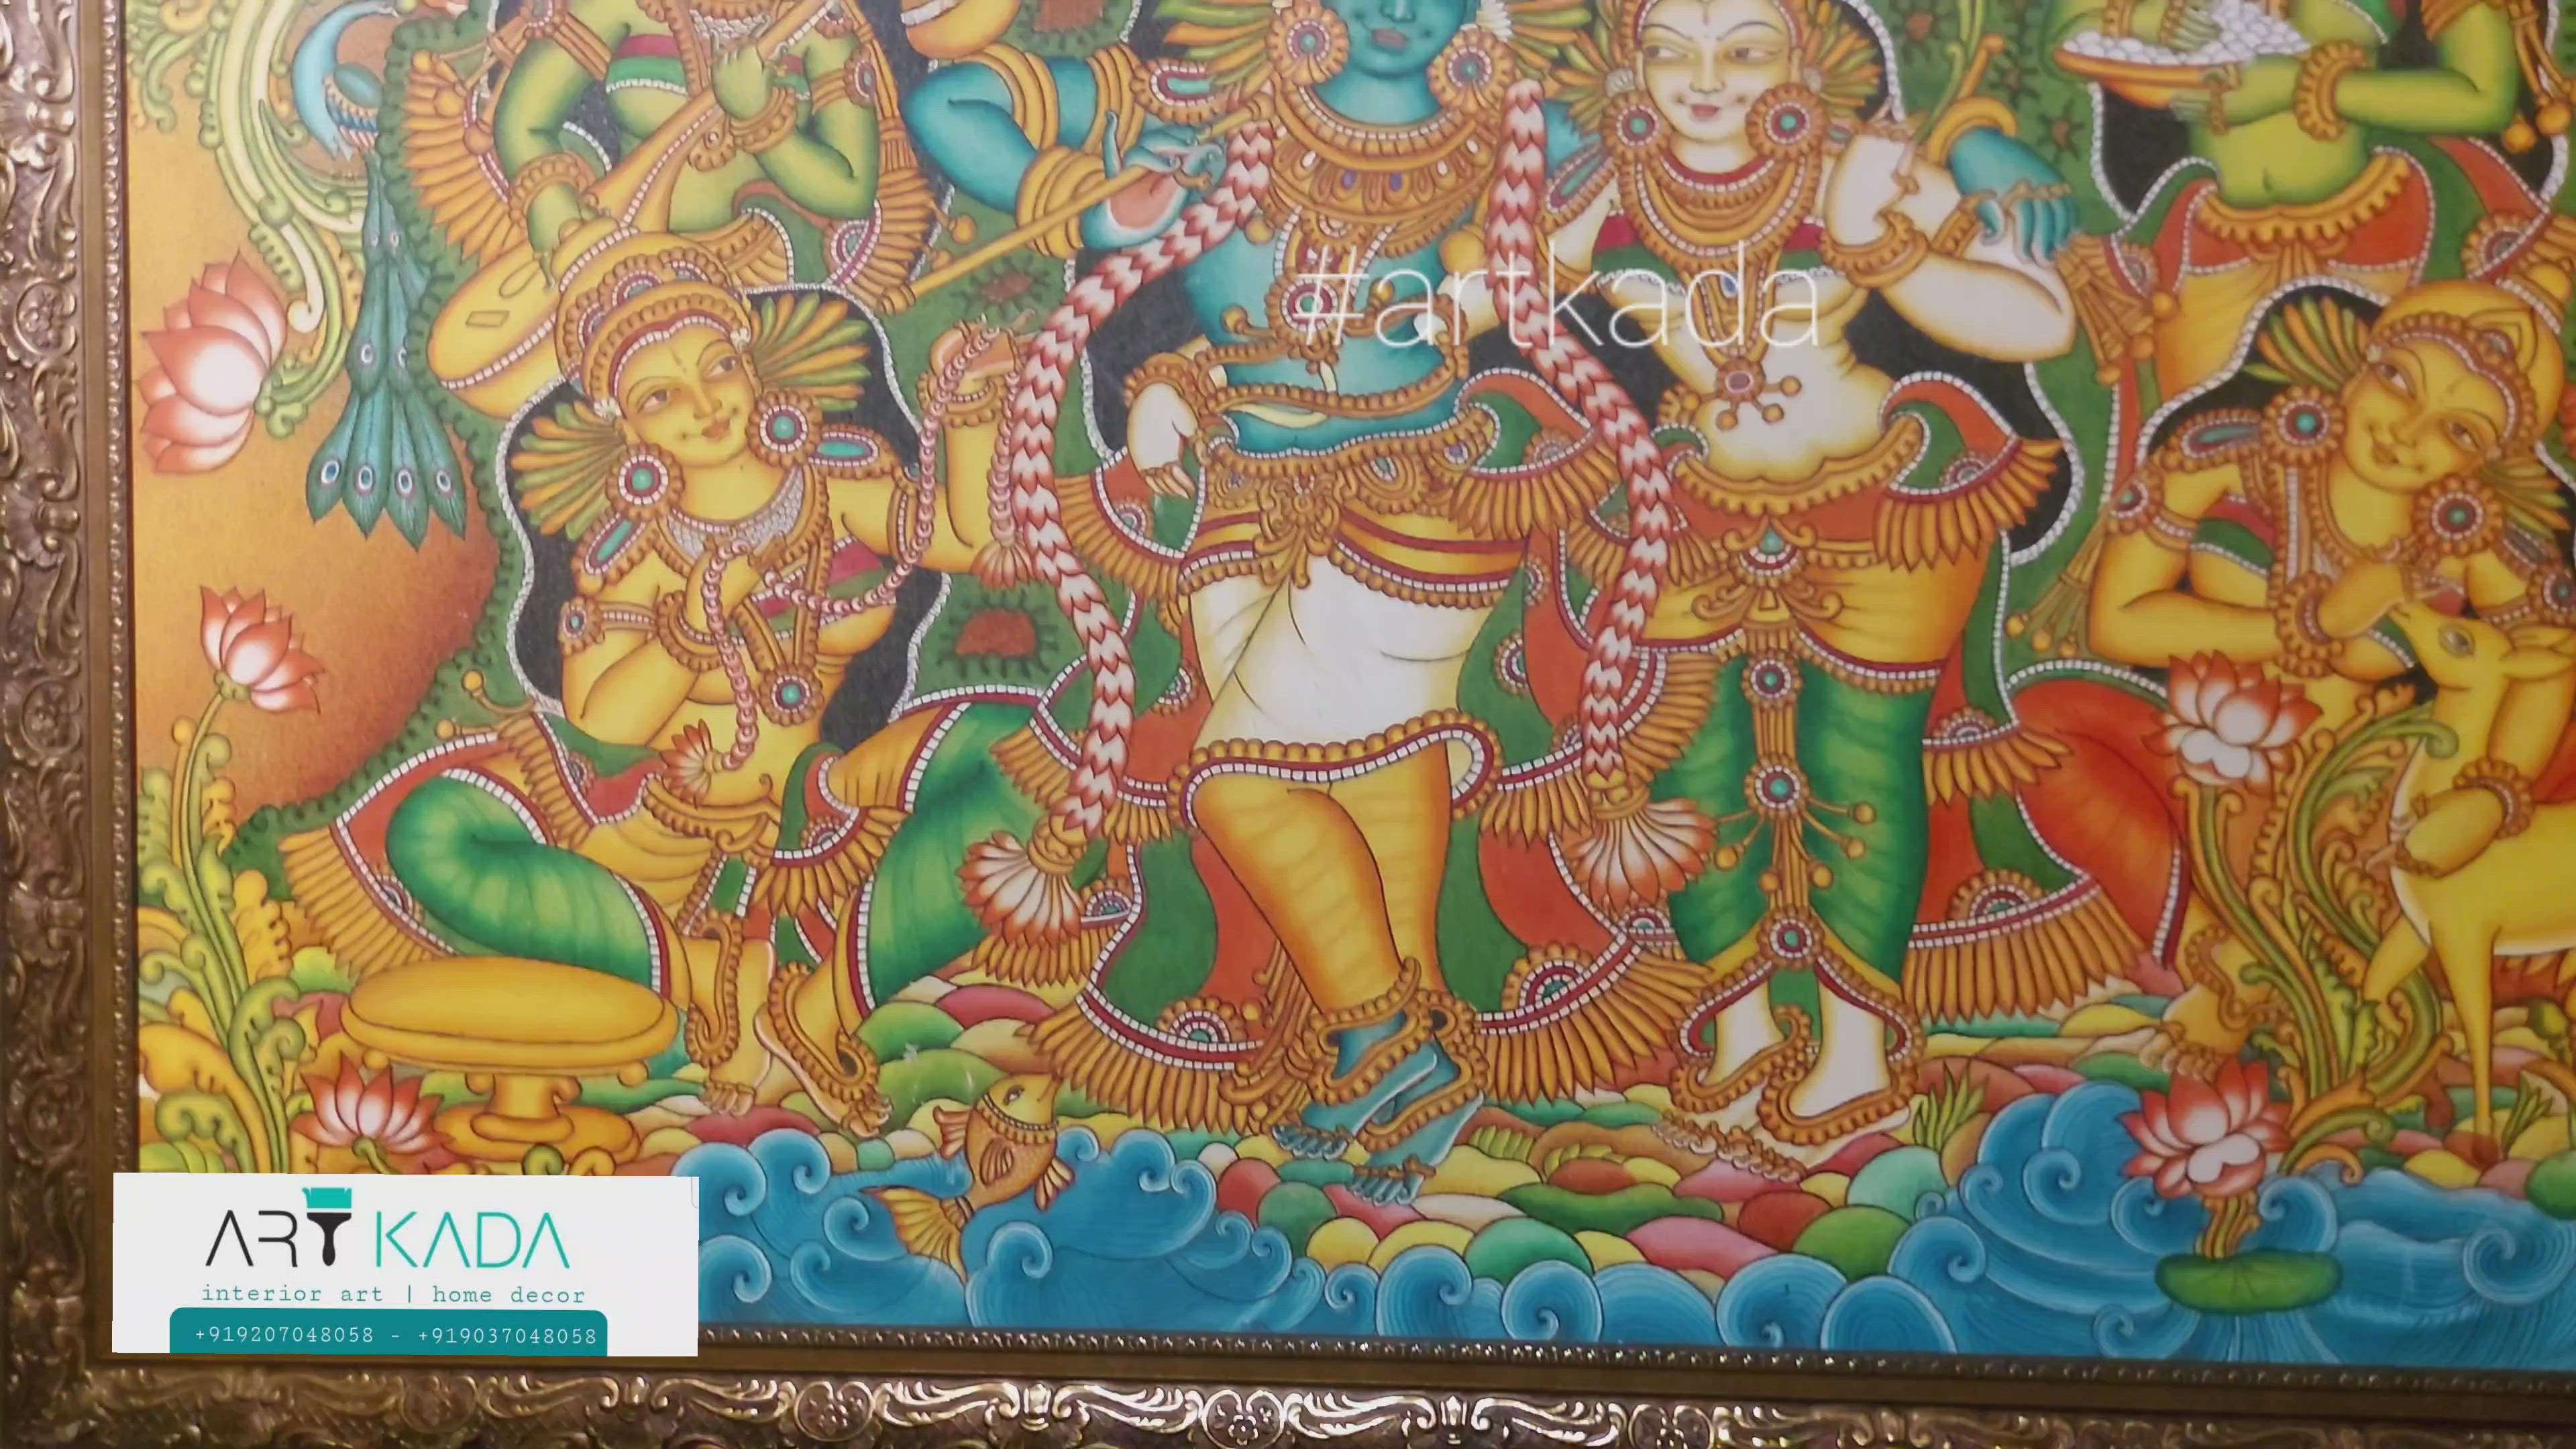 Radhakrishna mural painting on canvas